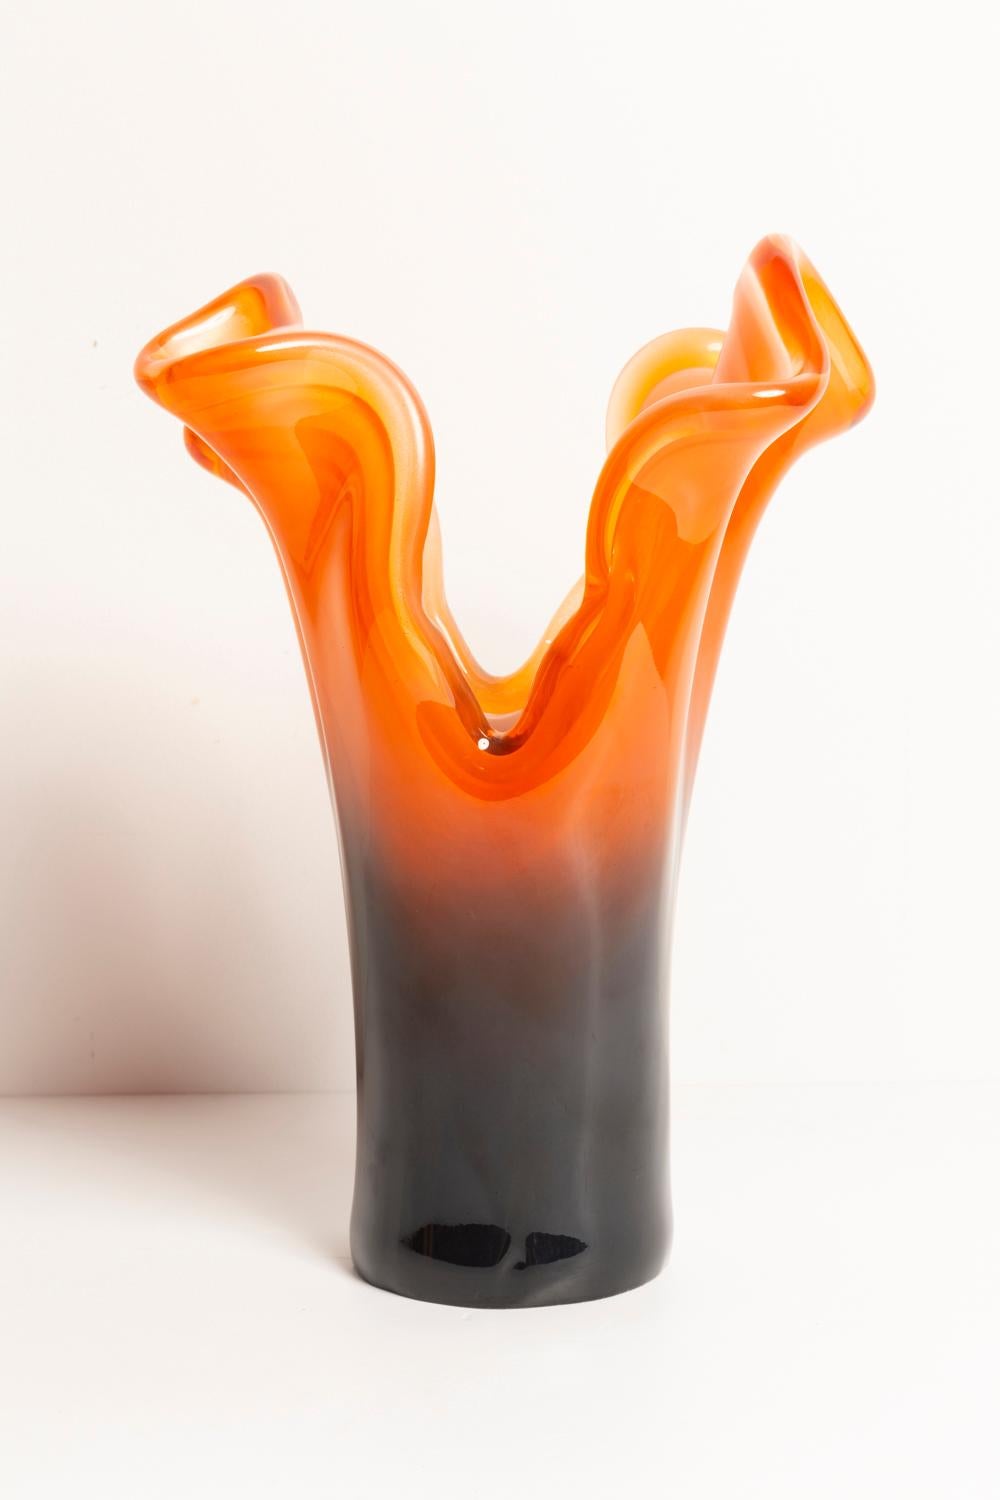 Midcentury Vintage Orange and Black Murano Glass Vase, Italy, 2000s For Sale 2